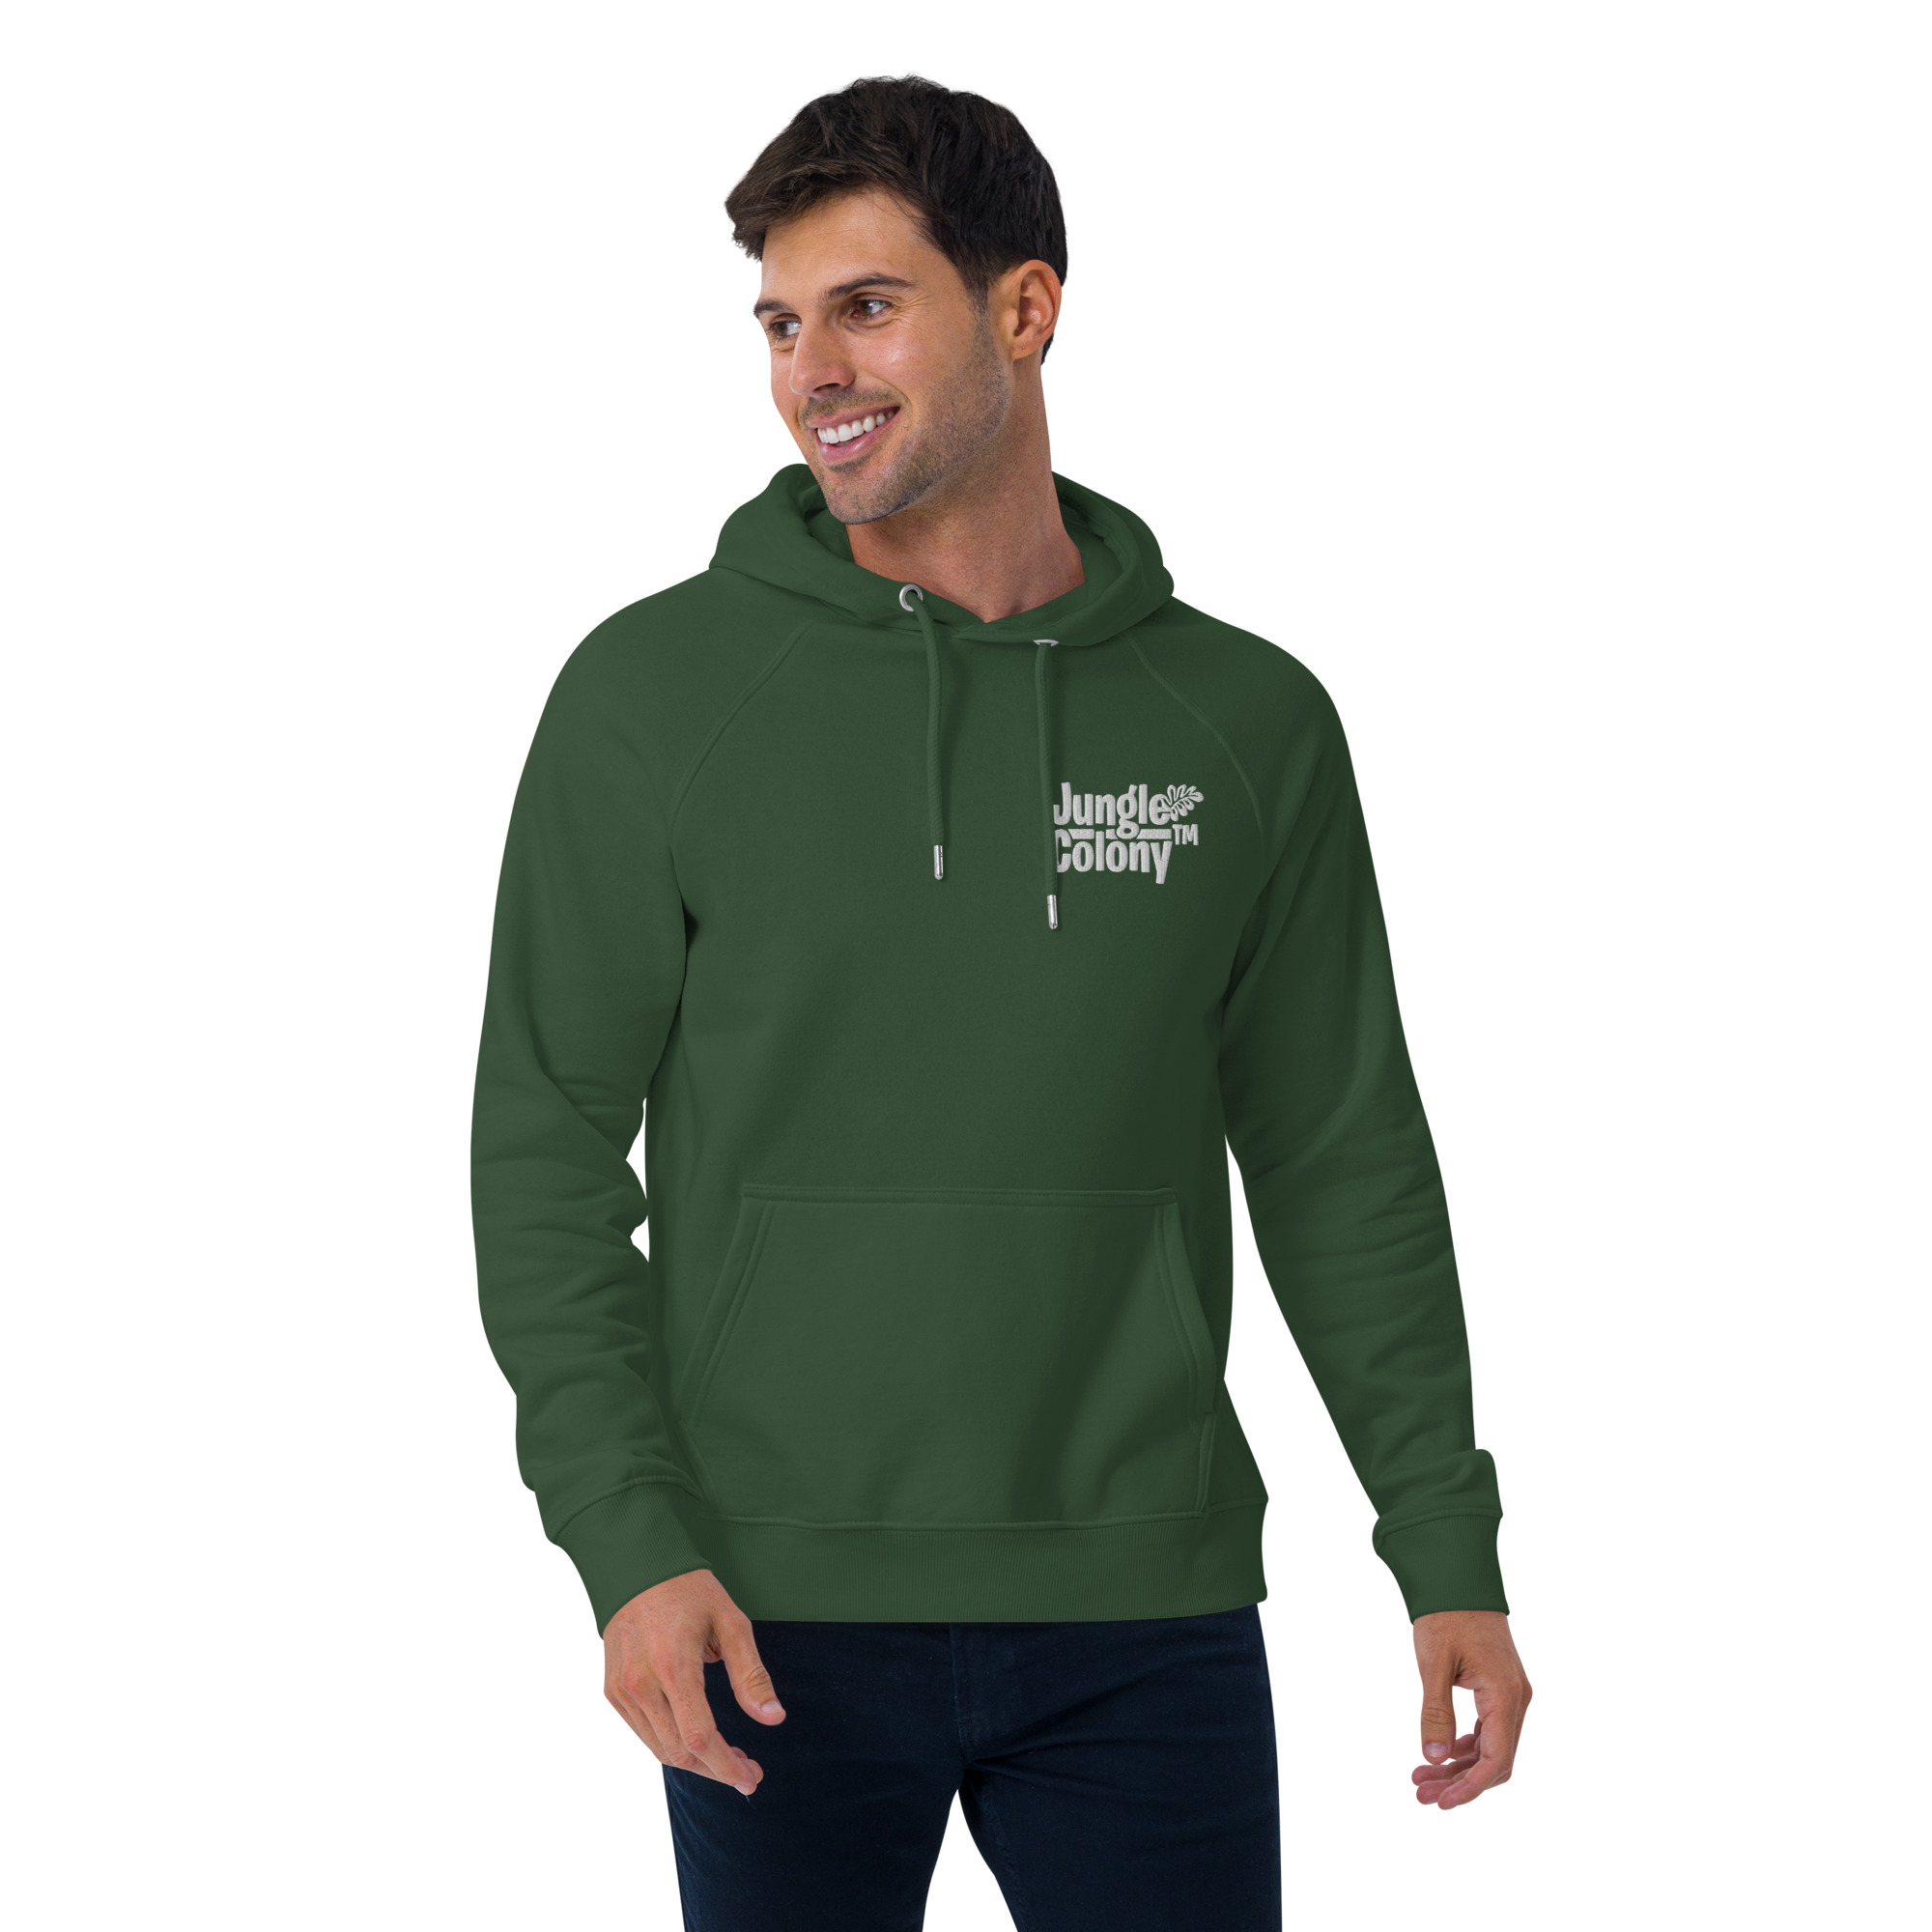 unisex-eco-raglan-hoodie-bottle-green-front-2-6420086c88184.jpg